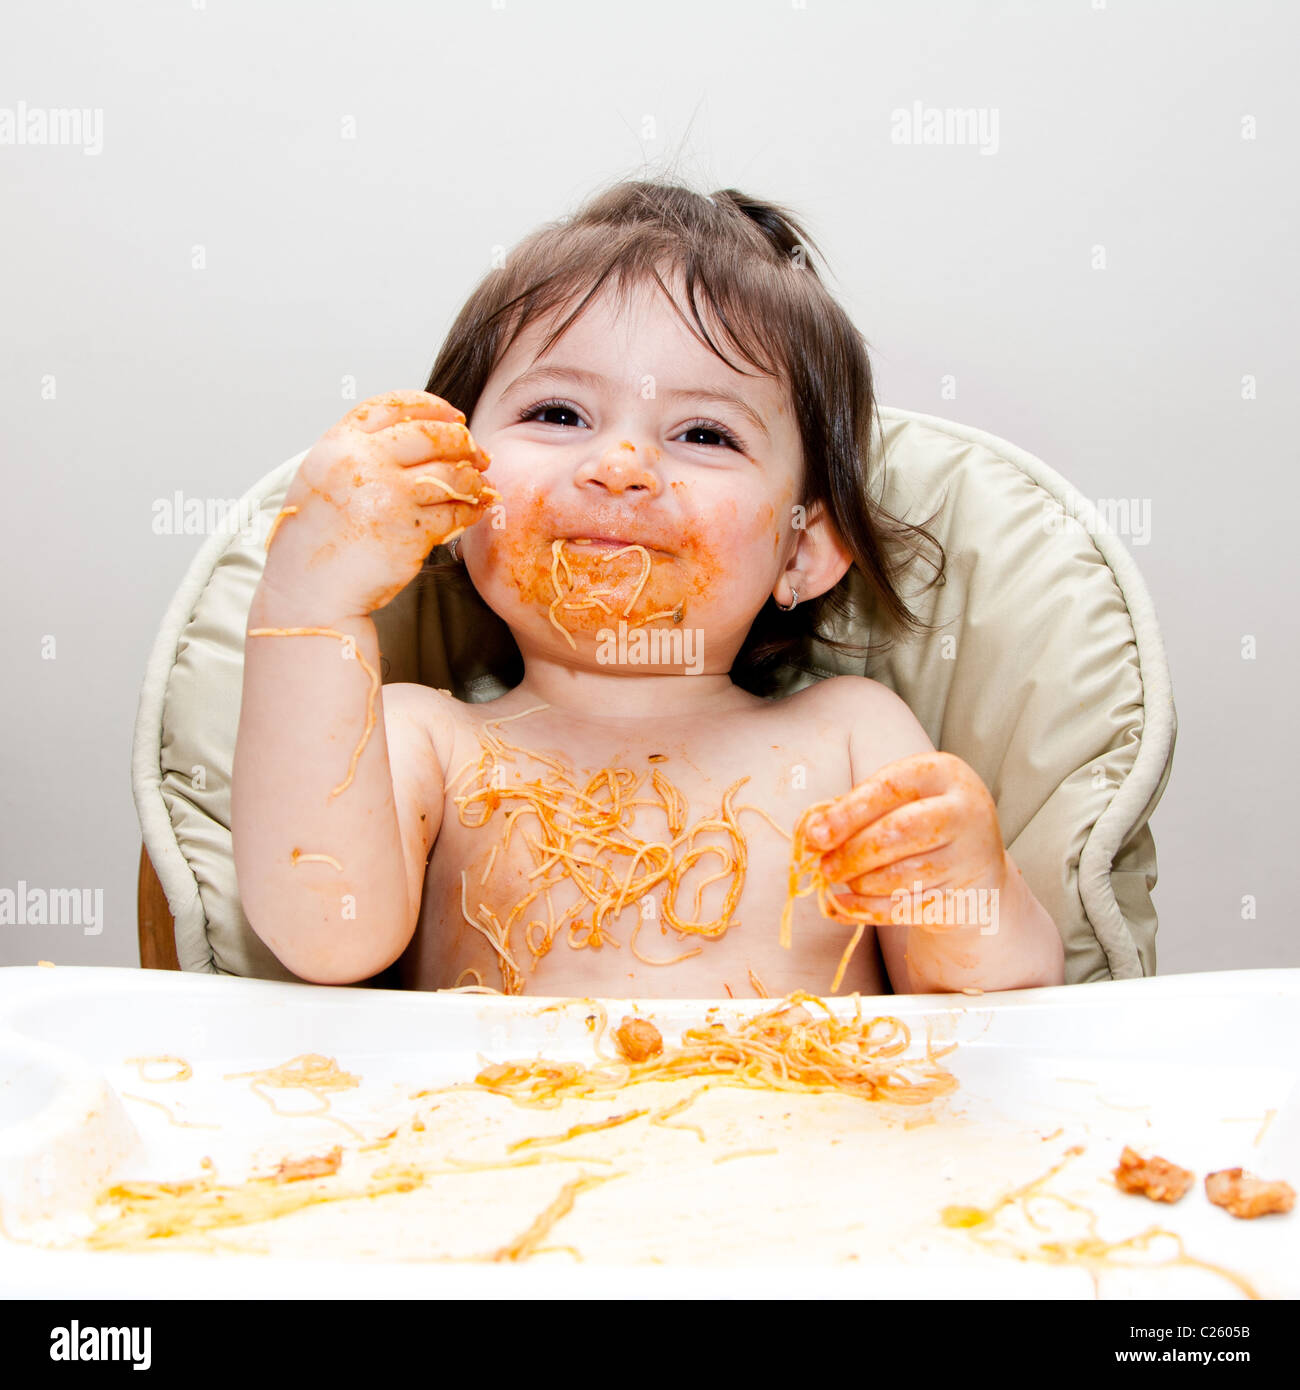 Happy smiling baby having fun eating messy covered in Spaghetti Angel Hair Pasta red marinara tomato sauce. Stock Photo